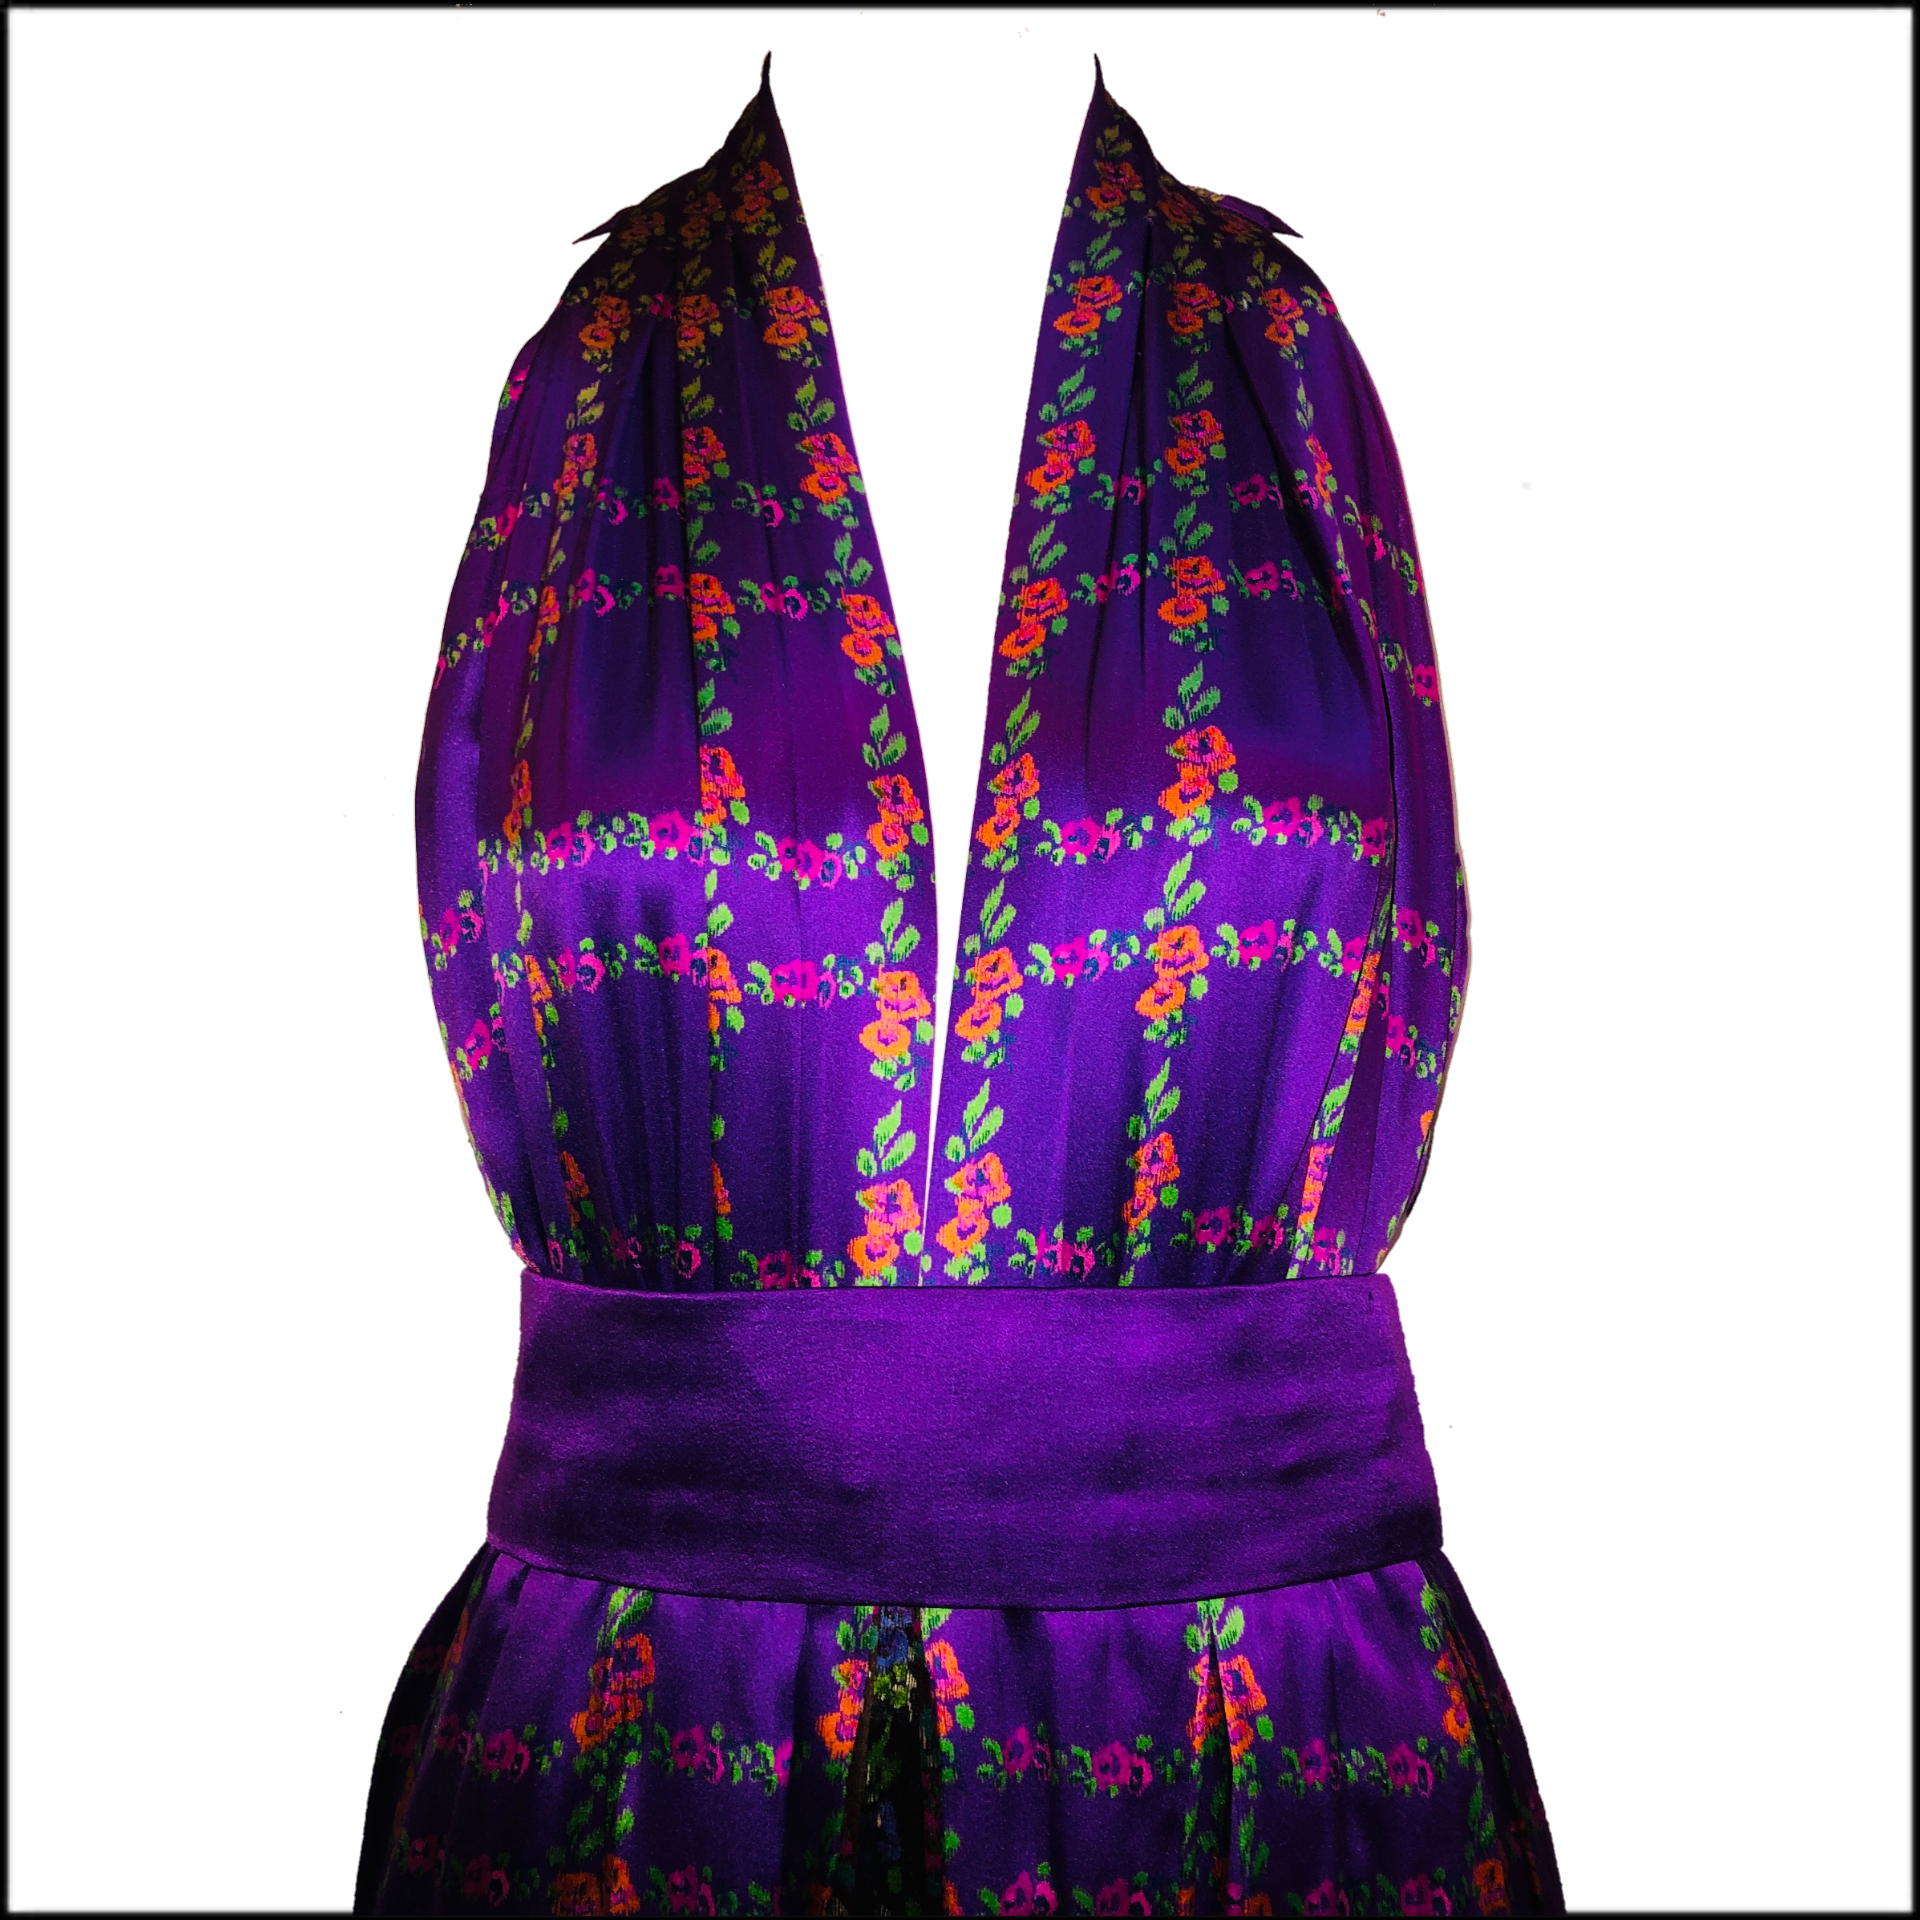 Roberta Capucci 70s Magnificent Couture Silk Layered Gown, bodice